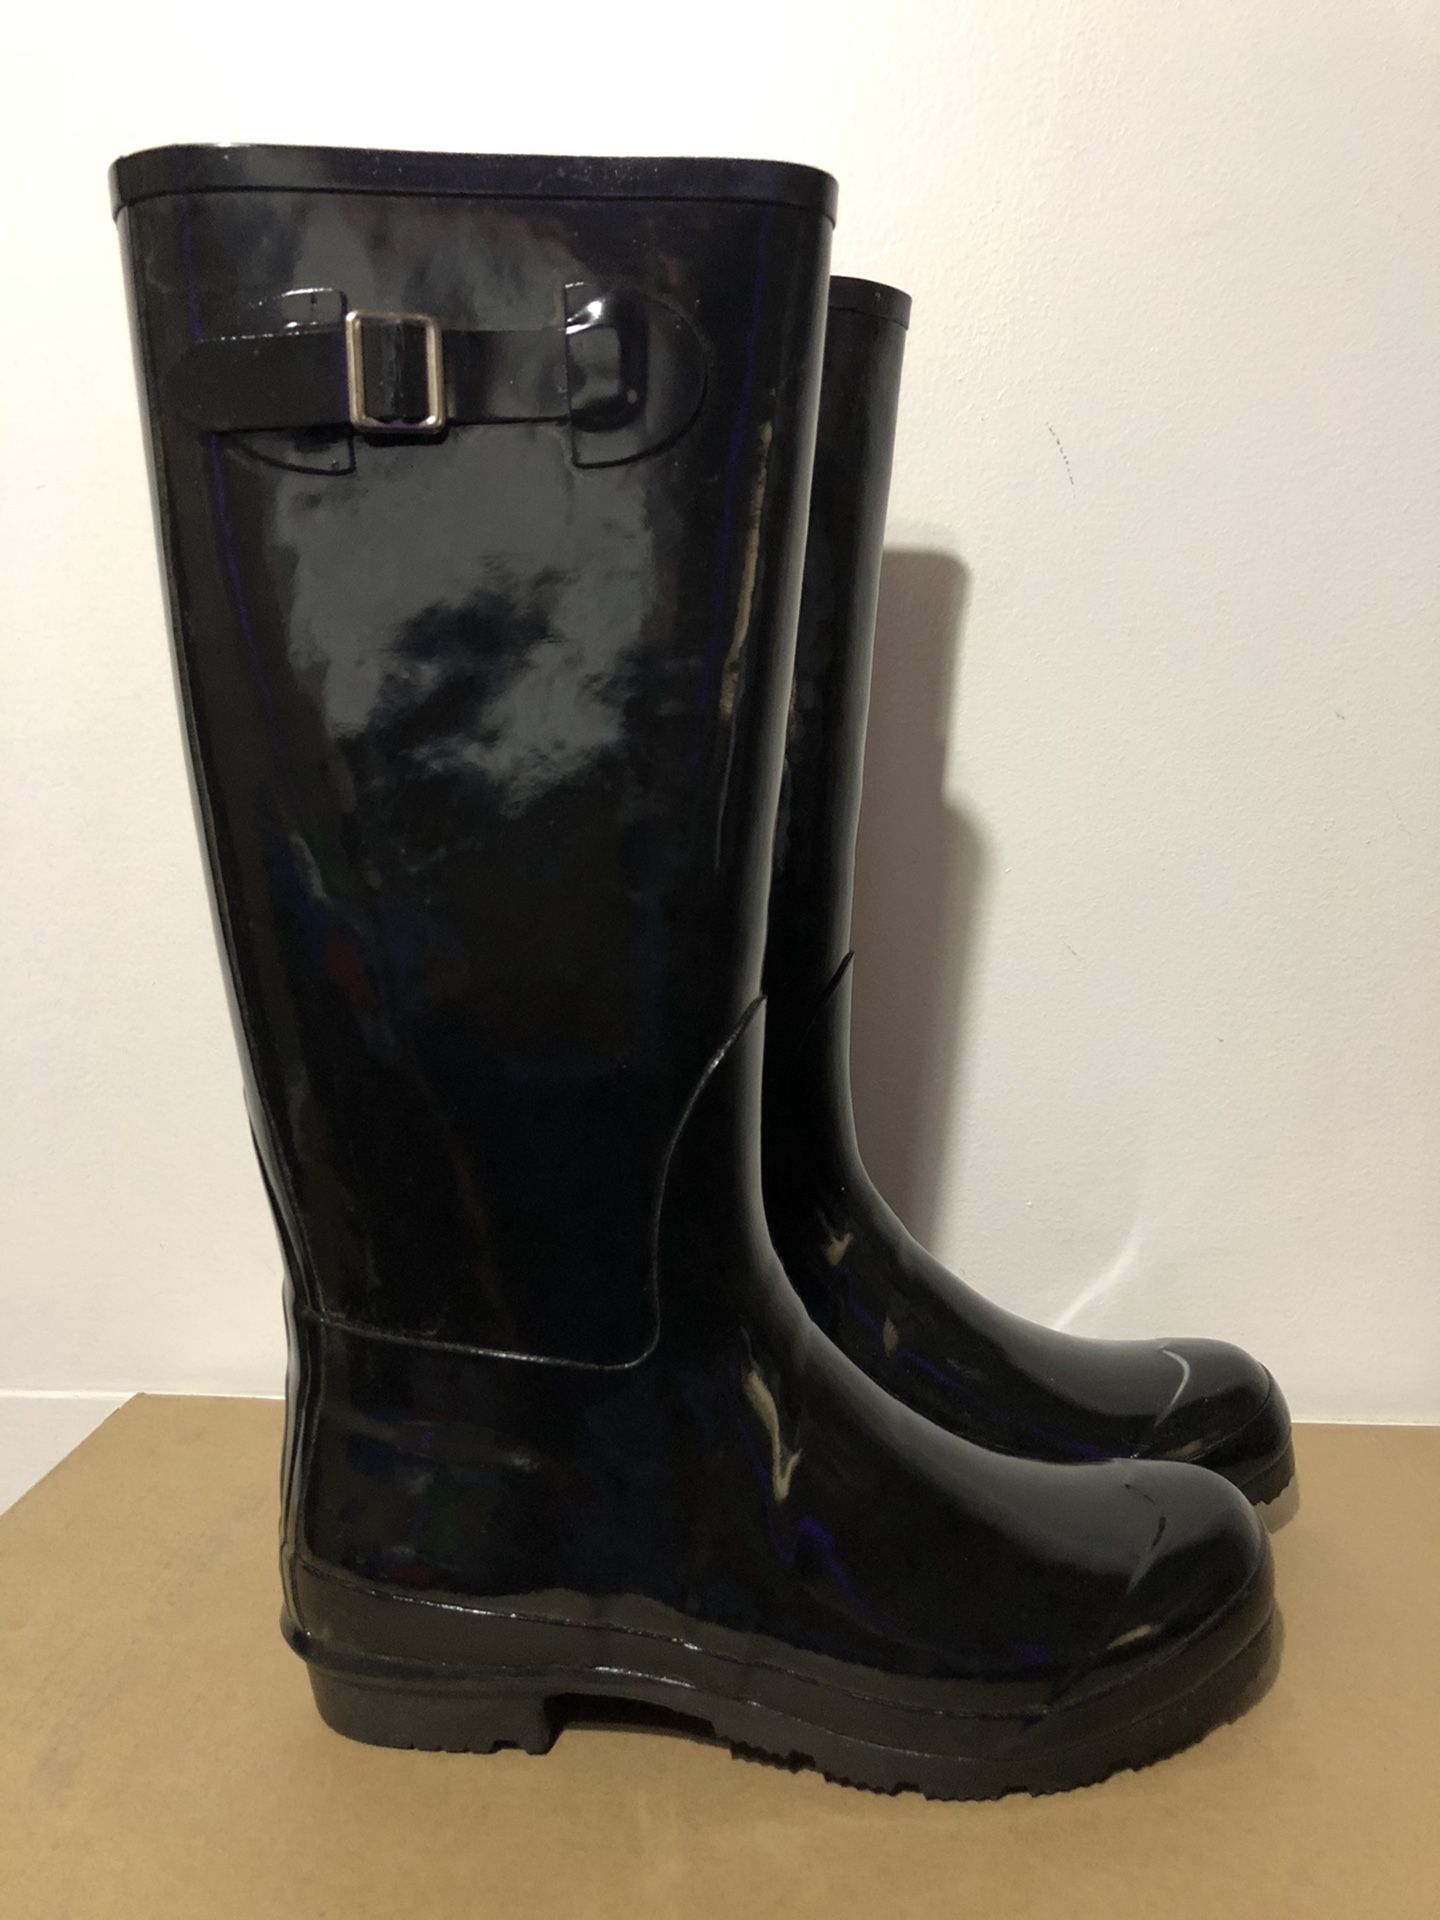 NEW Nomad Black Rain Boots (Women’s Size 9) - $15